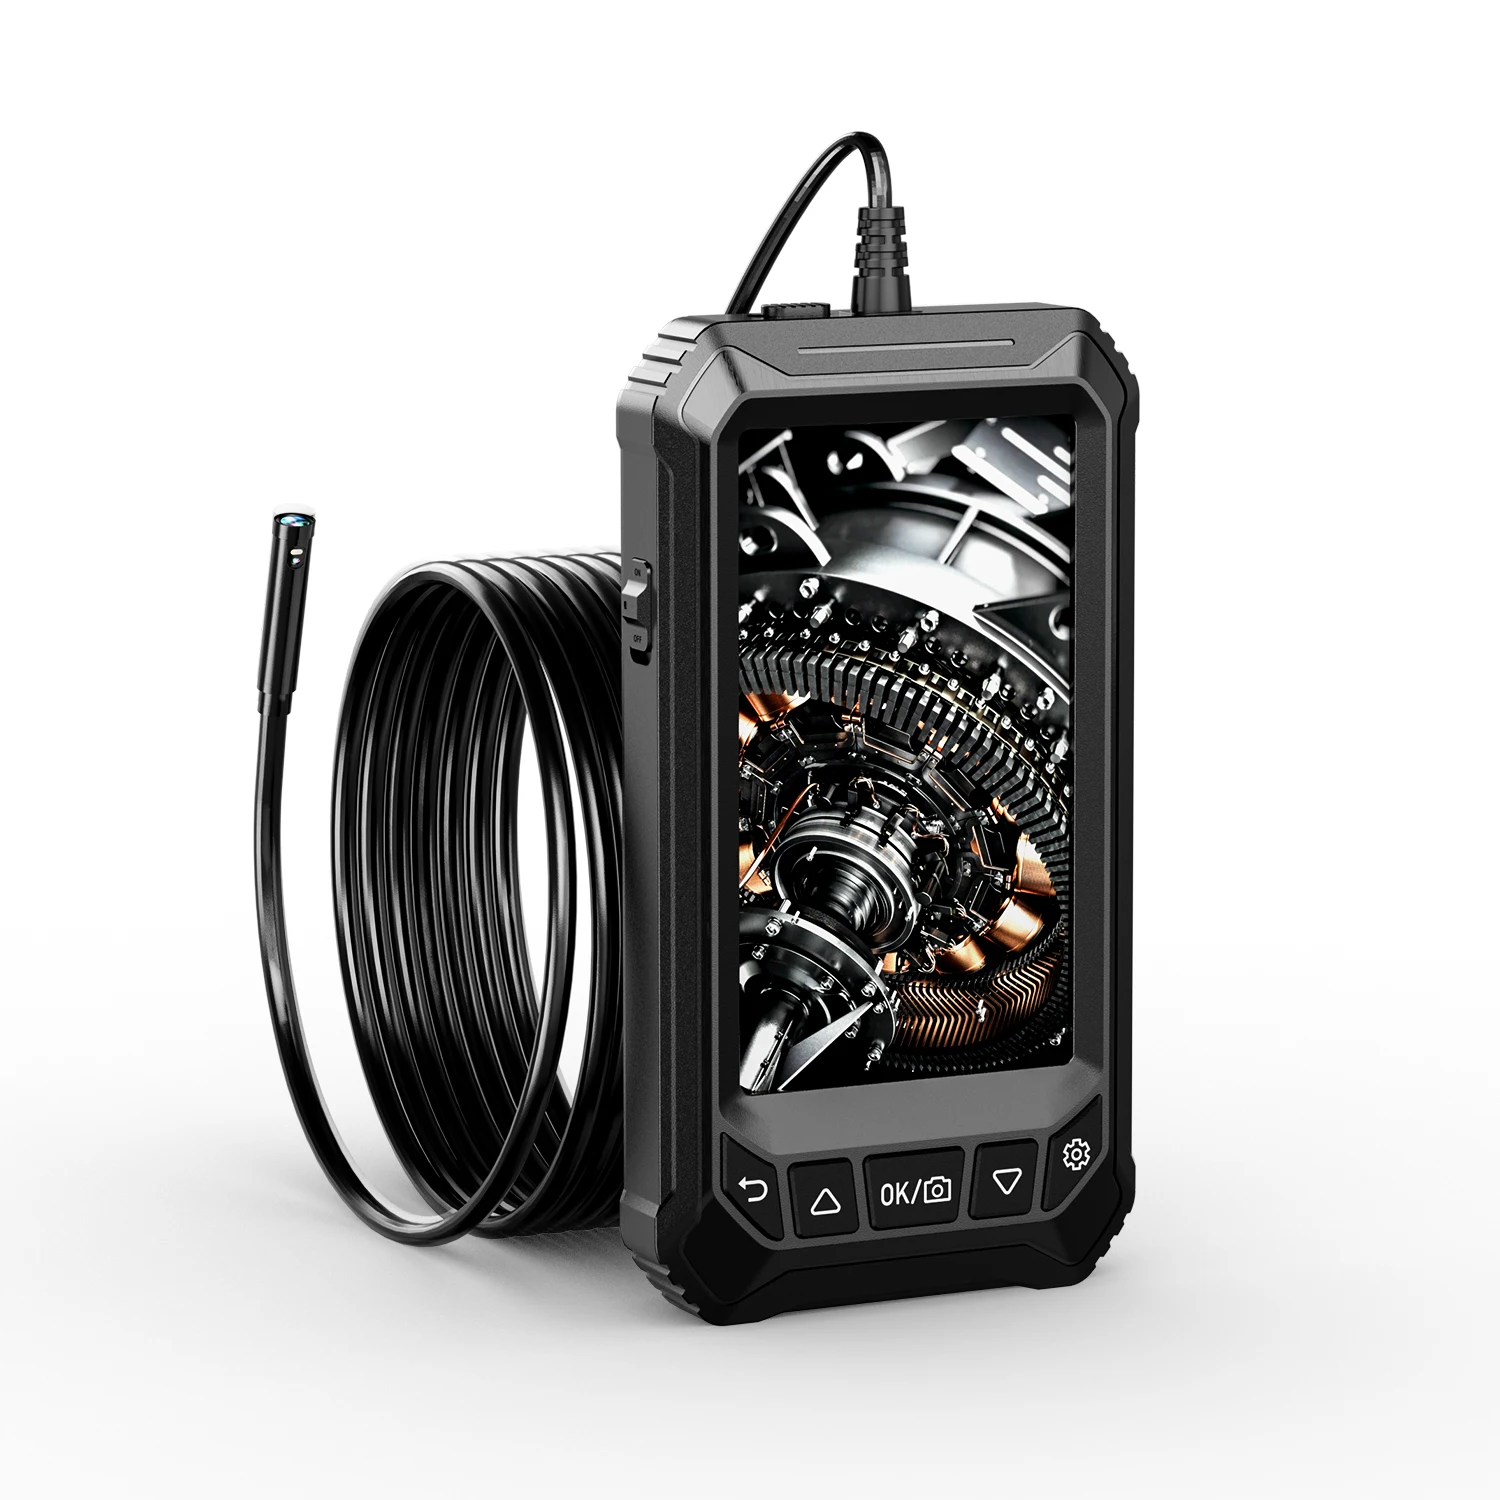 Caméra d'inspection Endoscope Endoscope Industriel, 10M 1080P Full